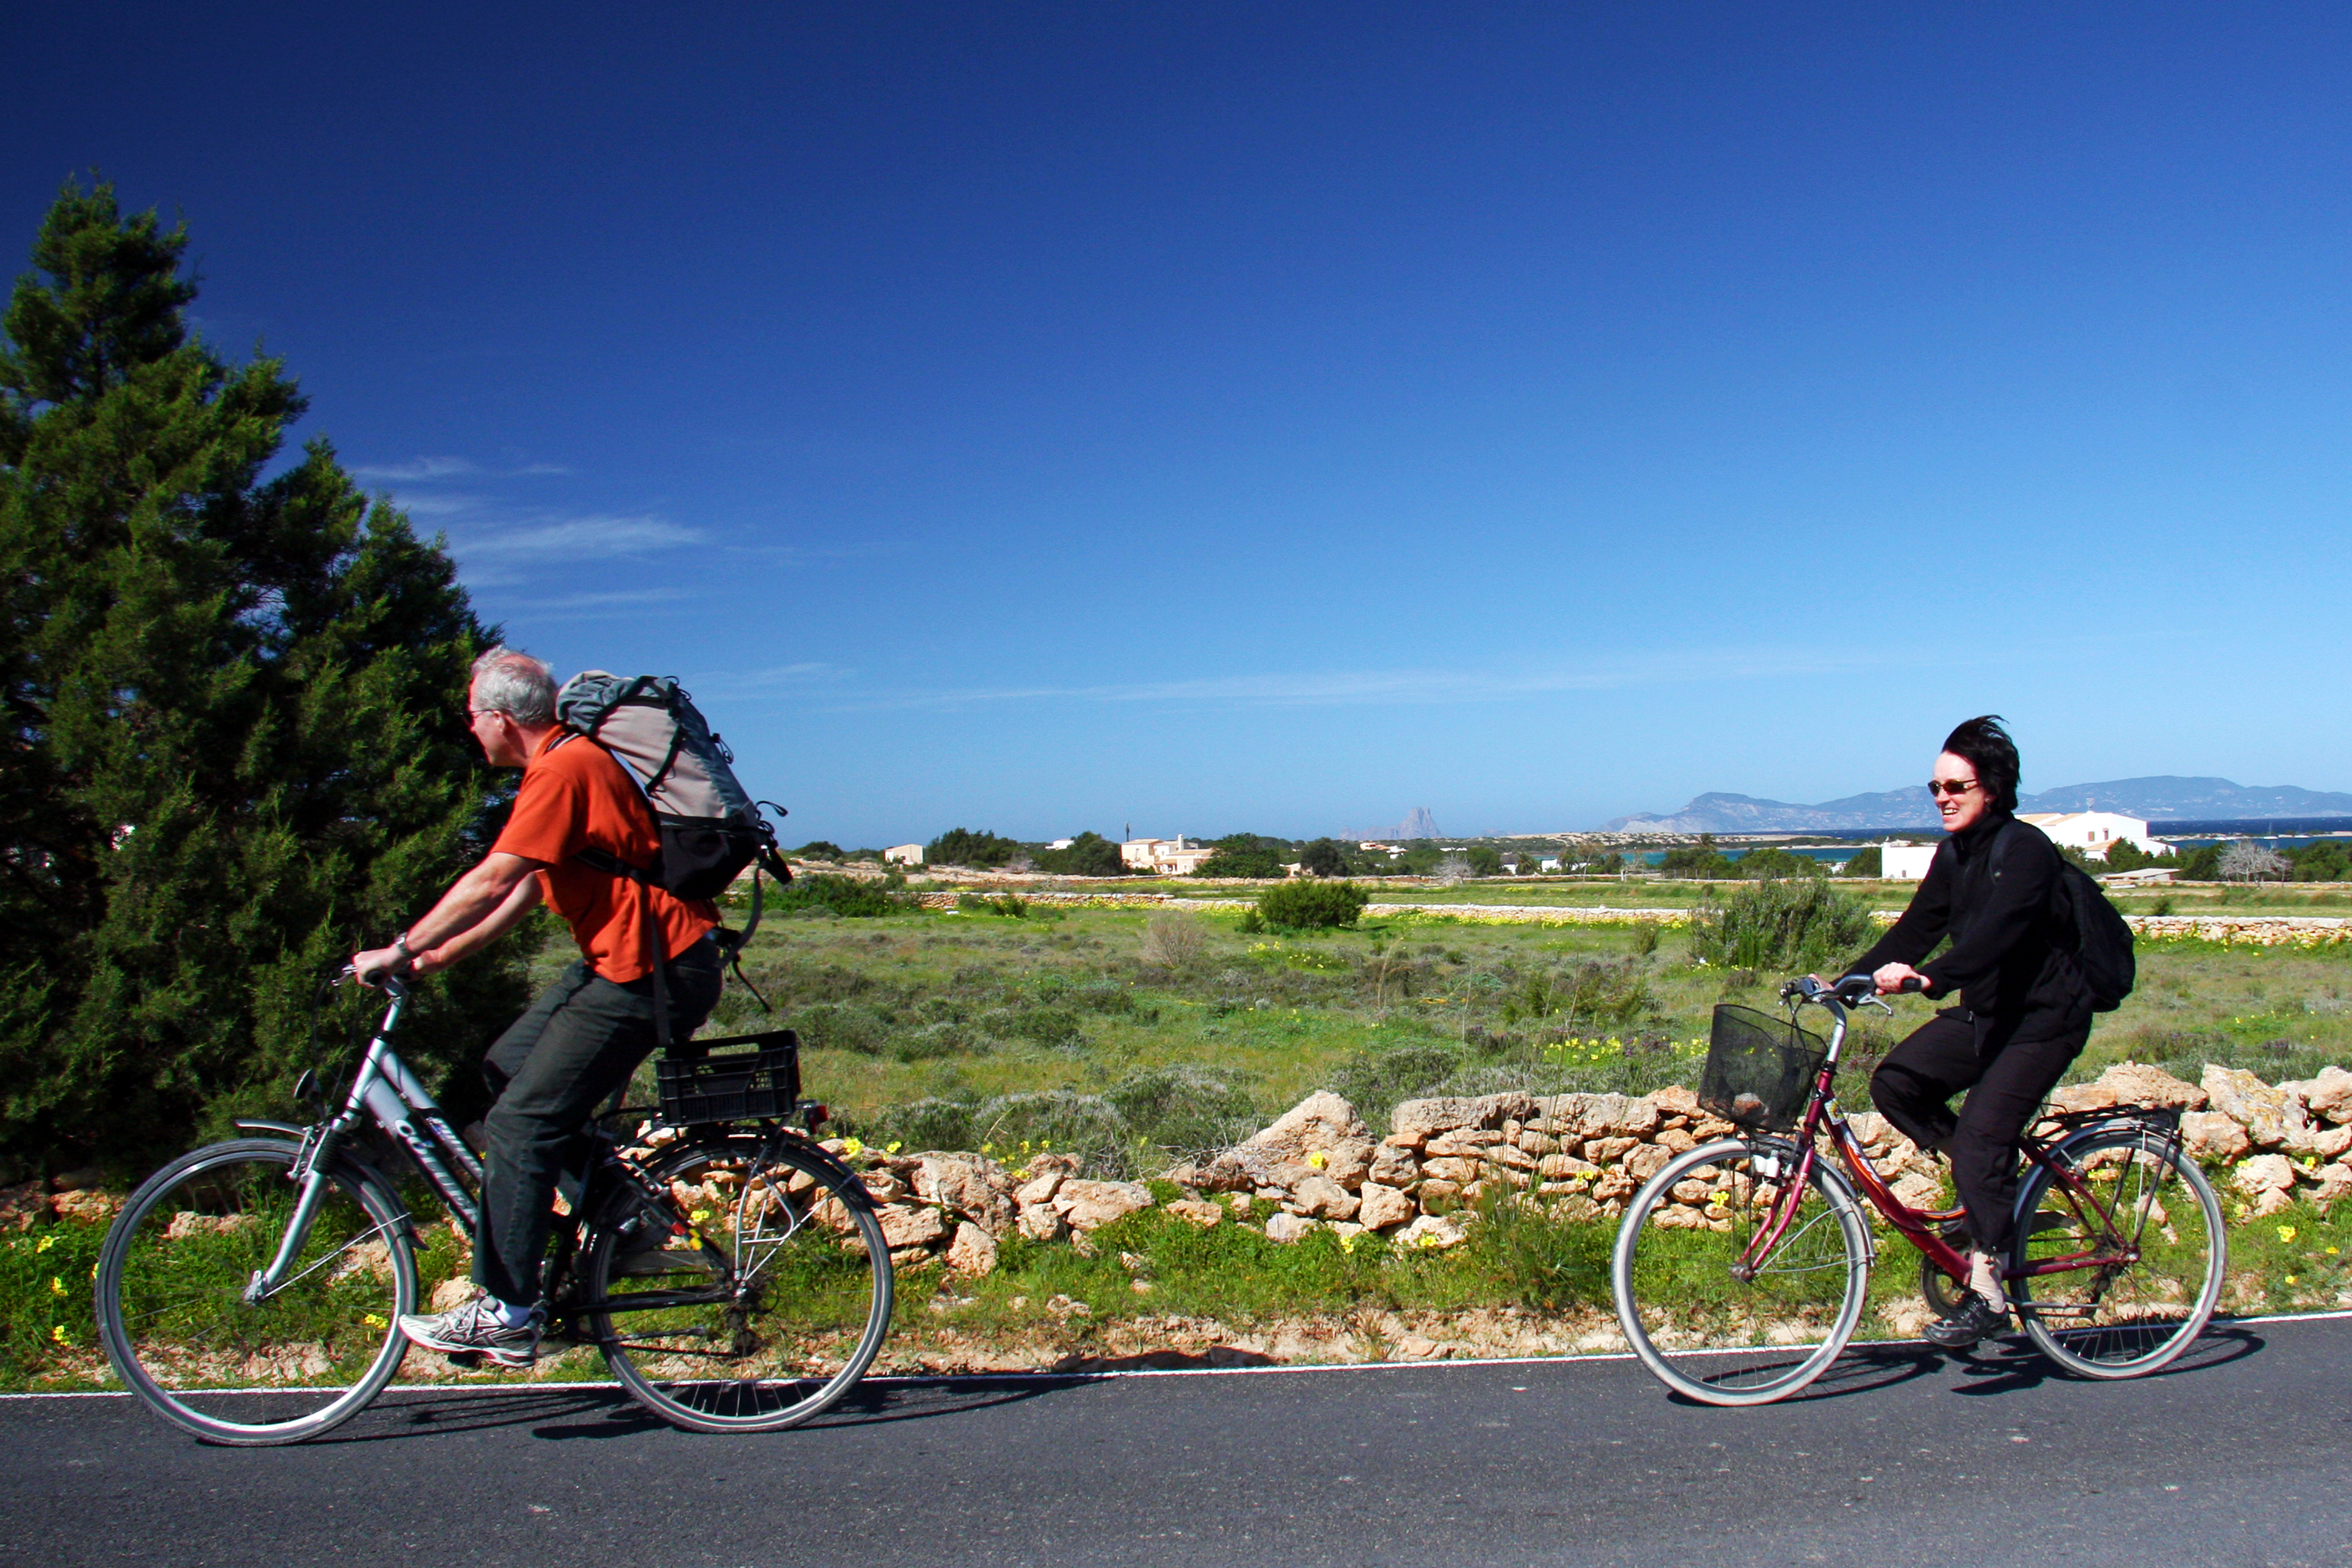 Klein Formentera, Balearen eiland, doe vakantie, zonvakantie